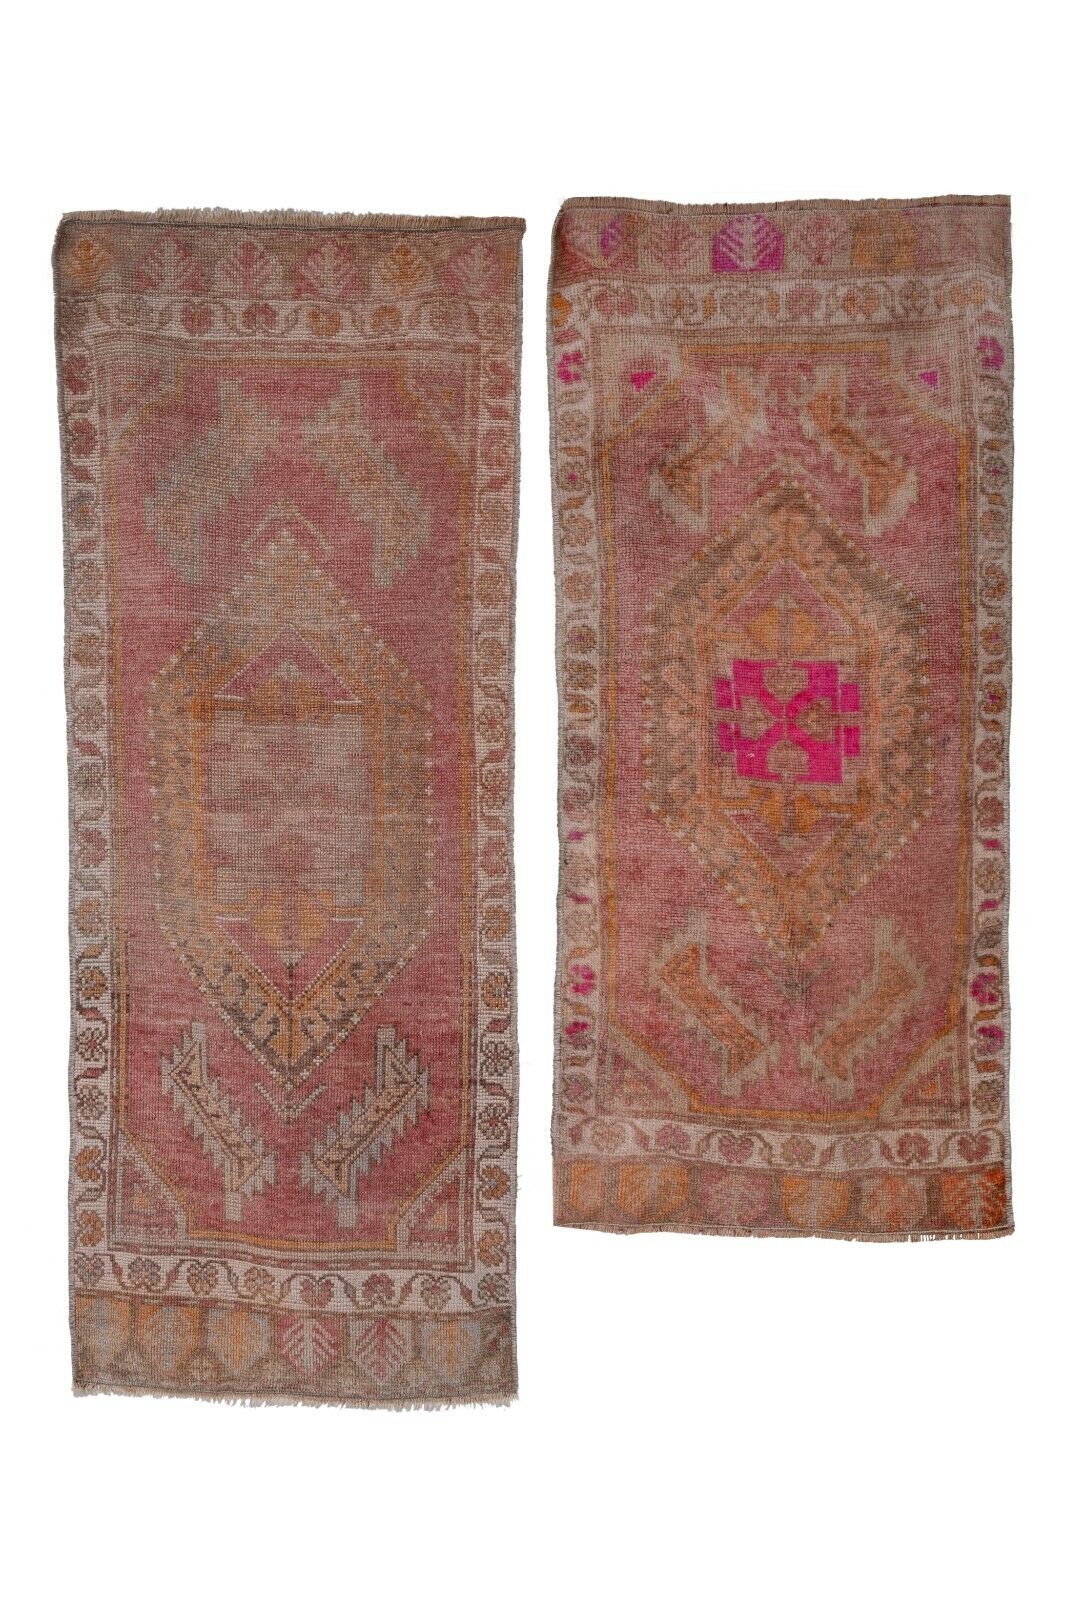 Traditional Handwoven Turkish Oushak Wool Doormat Rug Mat - a Pair 1'7" X 3'11"